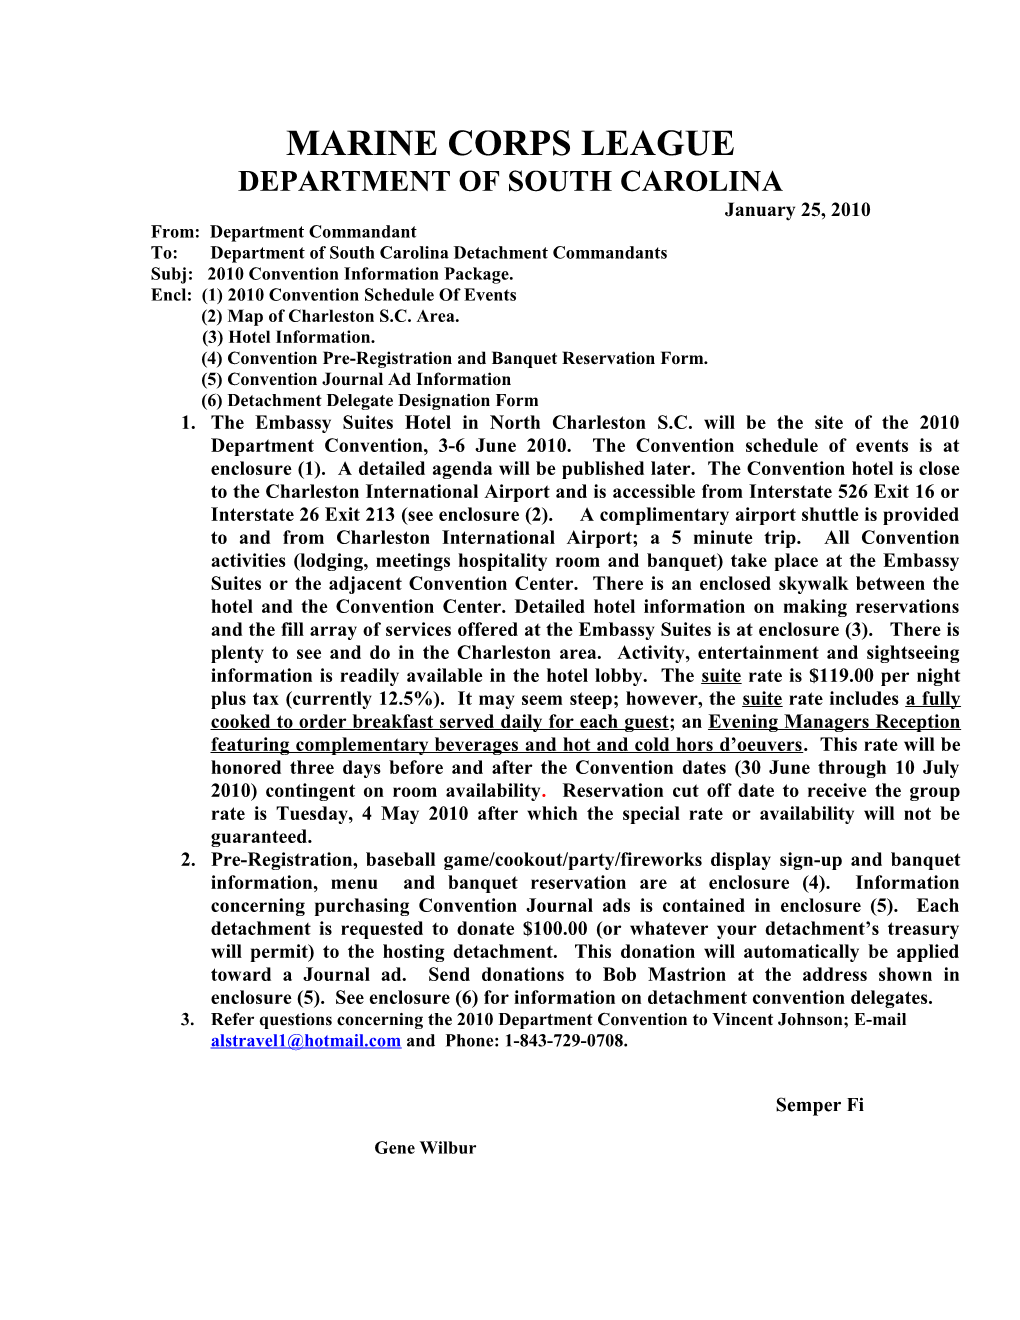 To: Department of South Carolina Detachment Commandants